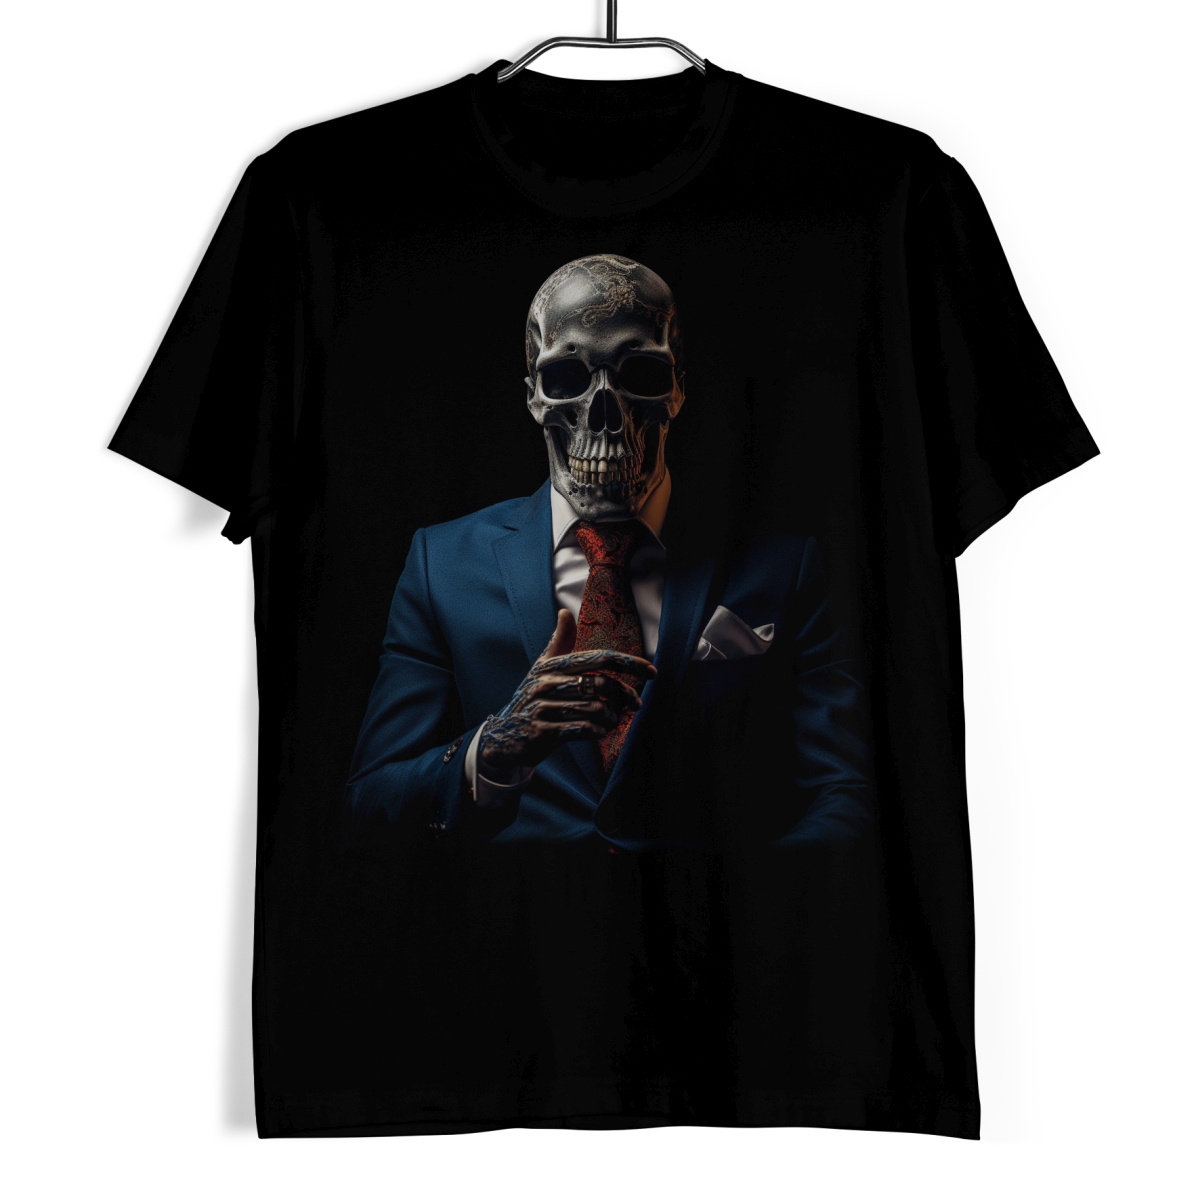 Tričko s lebkou - Elegance smrti XL